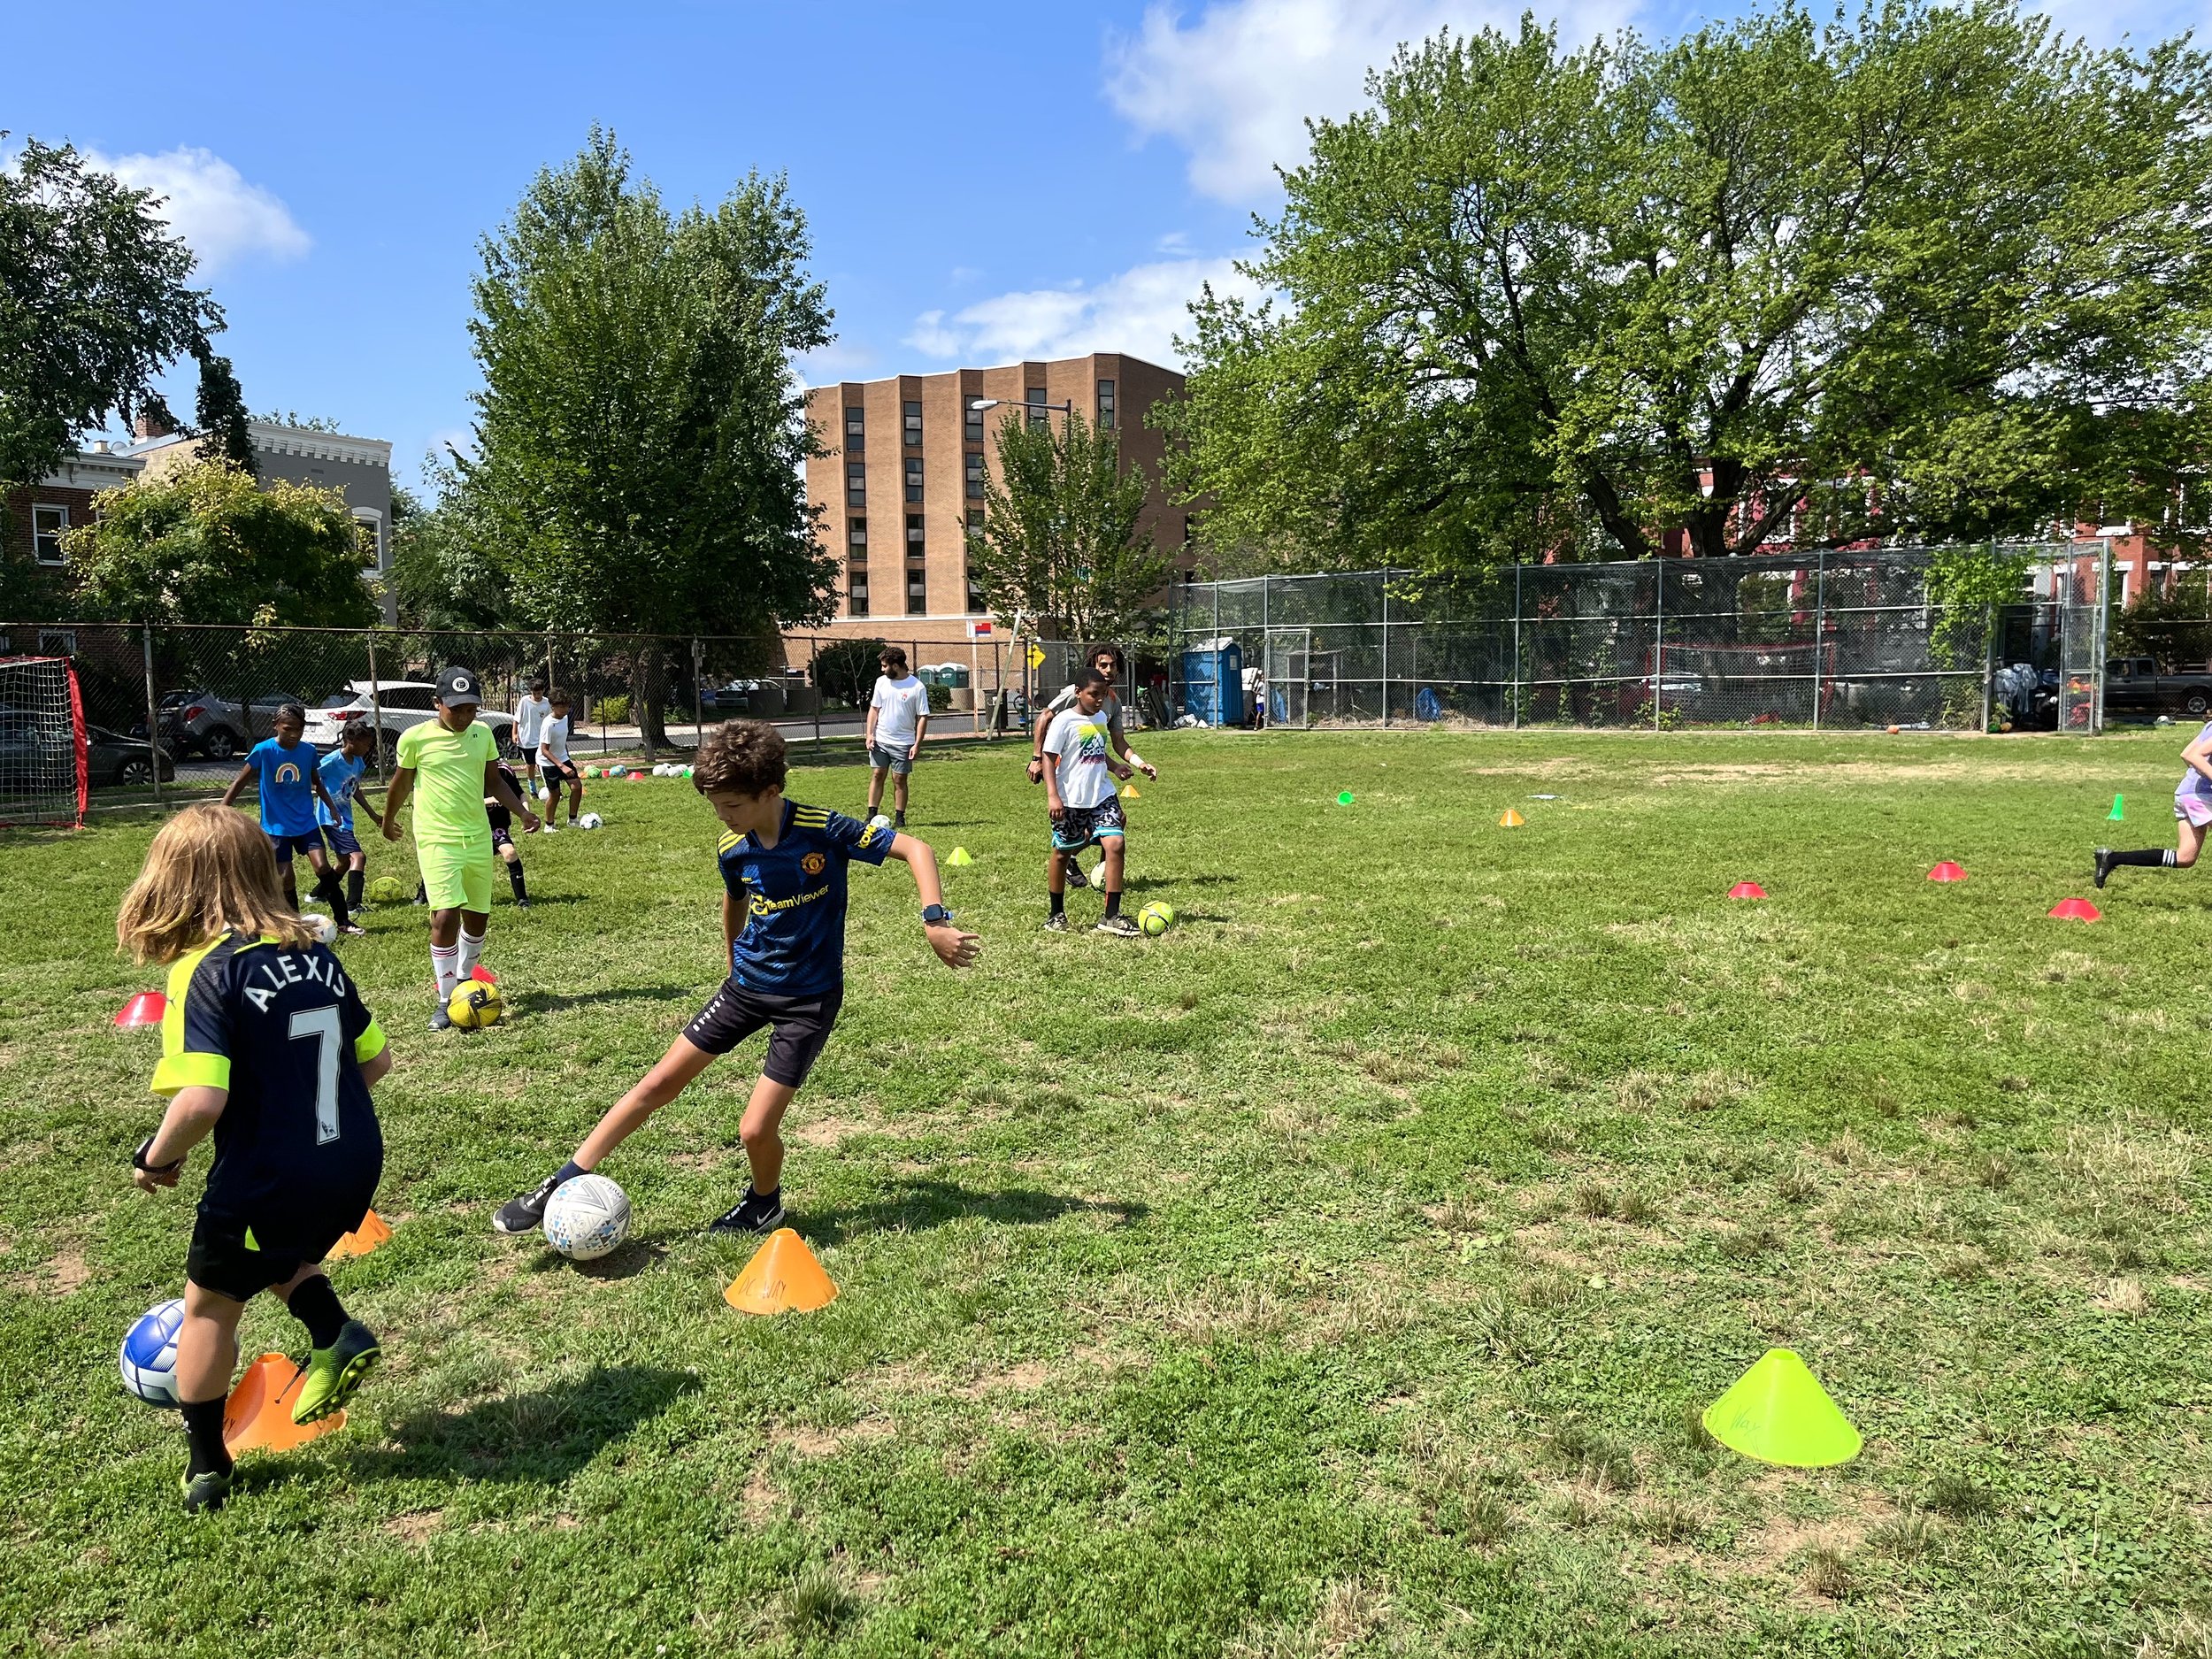 Dc-way-soccer-club-for-kids-in-washington-dc-summer-camp-at-tyler-elementary-school- 8562.jpeg